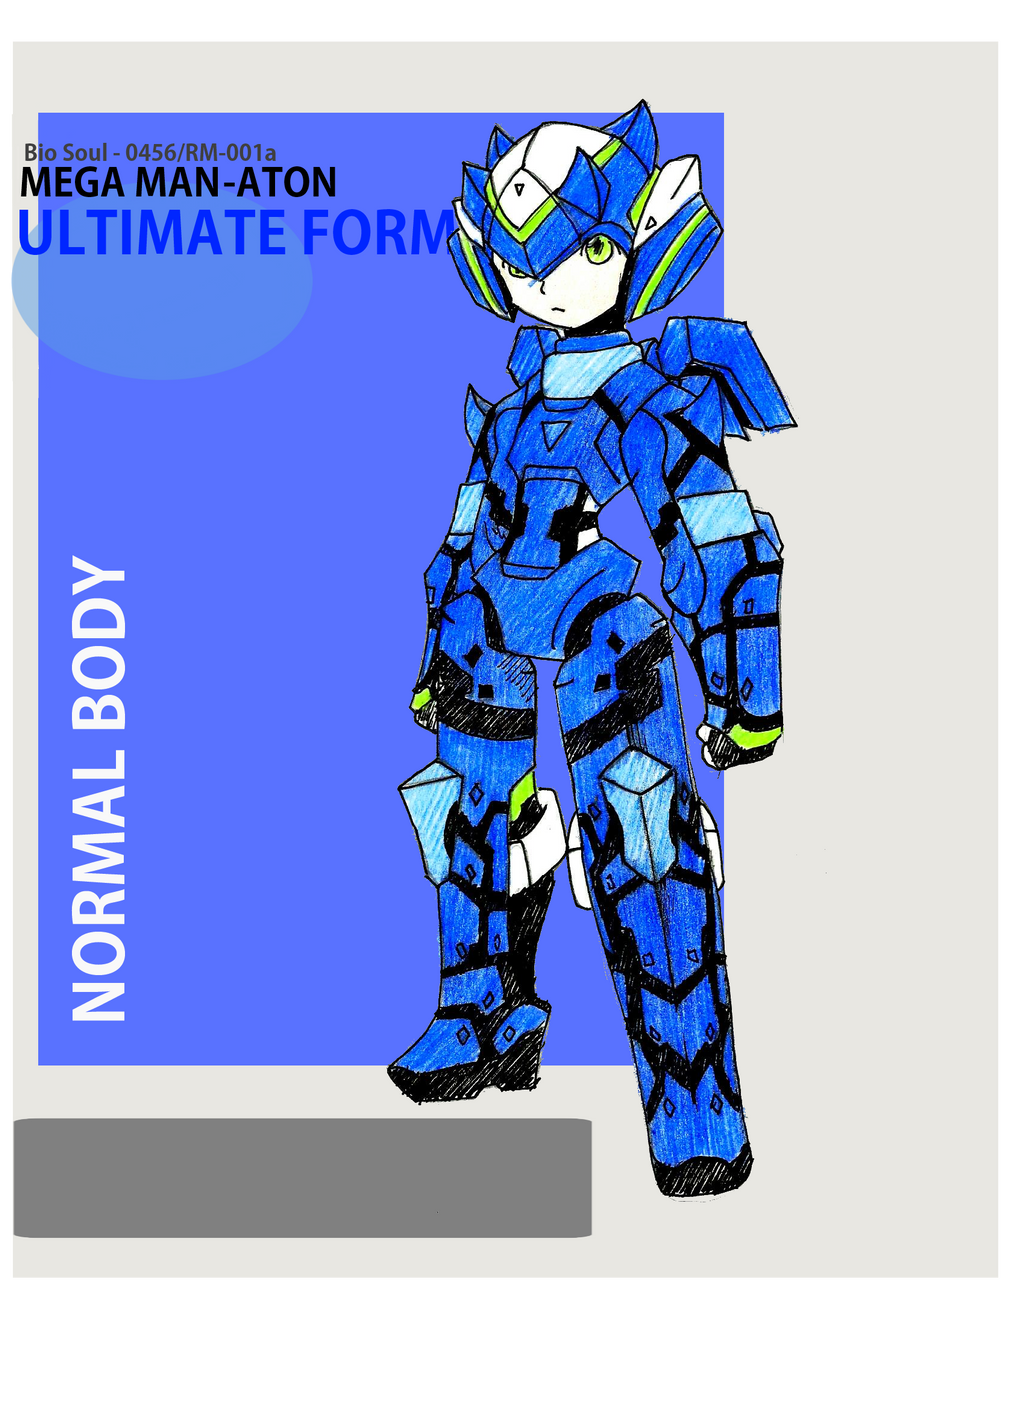 ultimate-form-01-normal-body-by-mugenatonman-on-deviantart